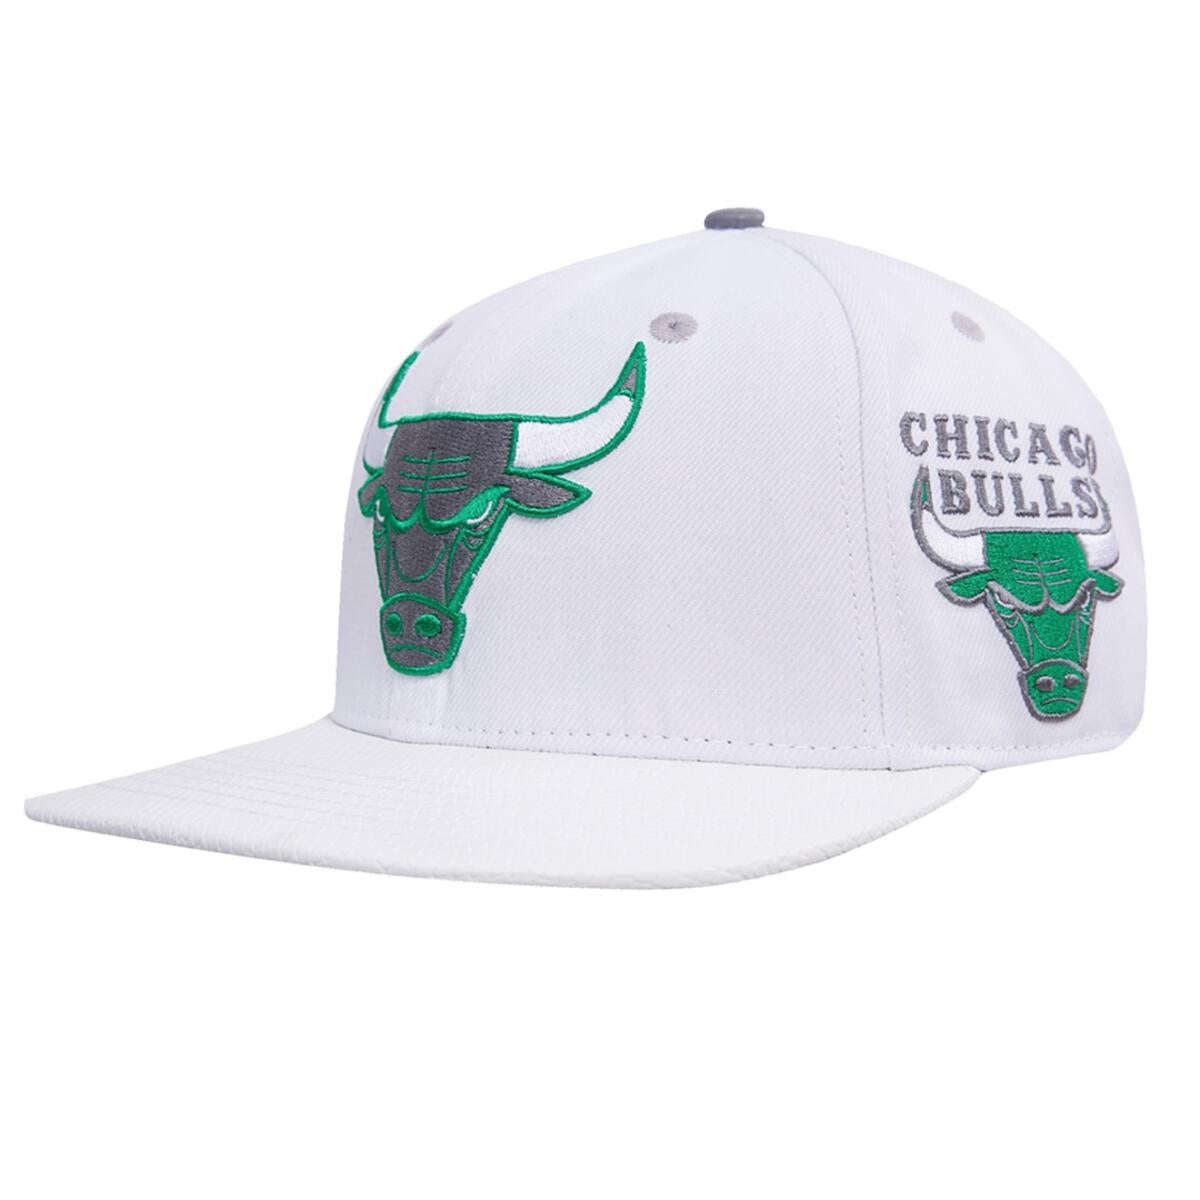 Pro Standard - Chicago Bulls Two Tone Leather Brim Snapback Hat